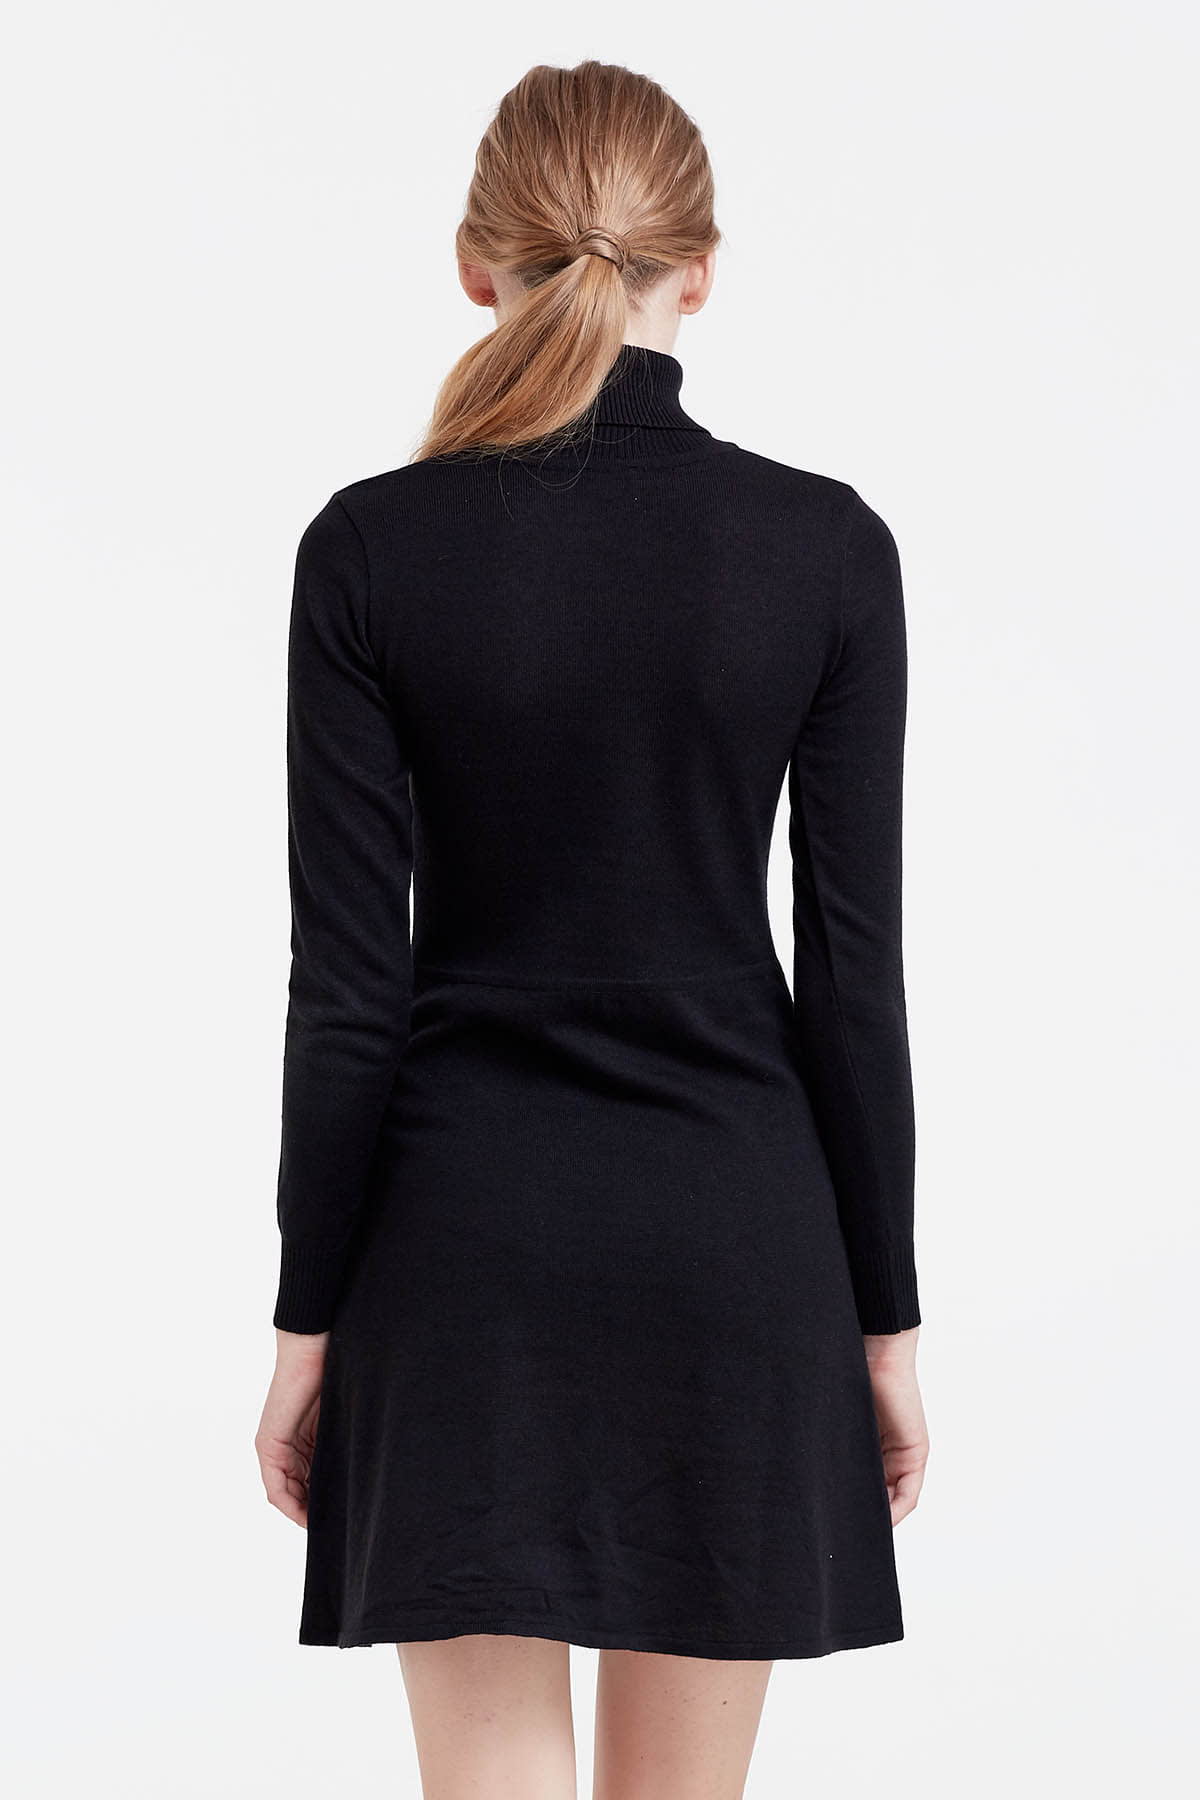 Black knitted dress , photo 4